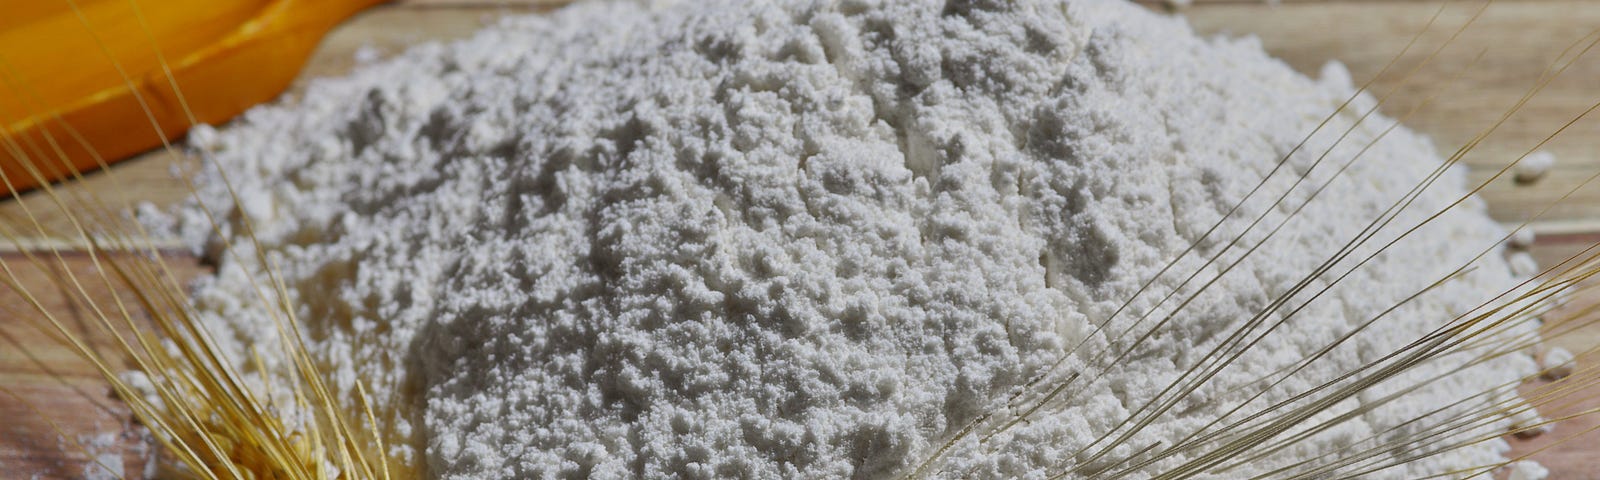 Flour and wheat